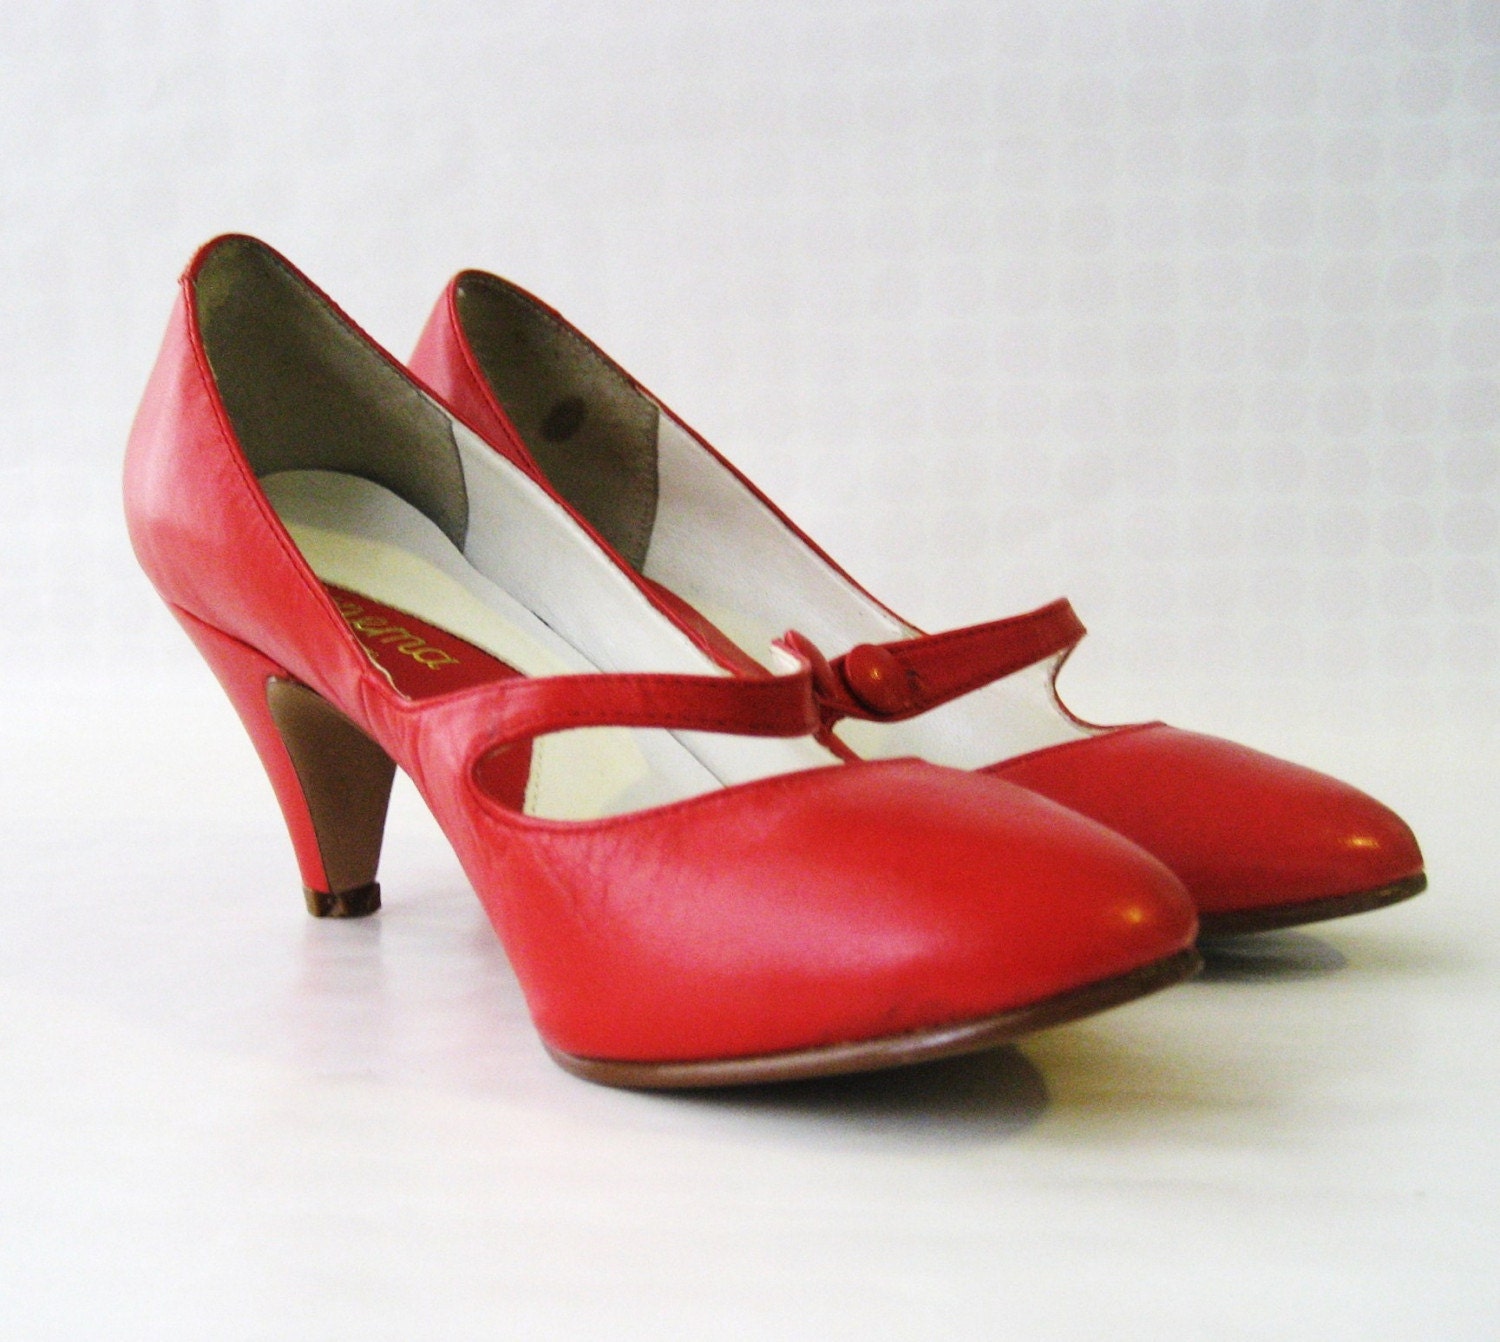 The Brigitte Bardot Shoes